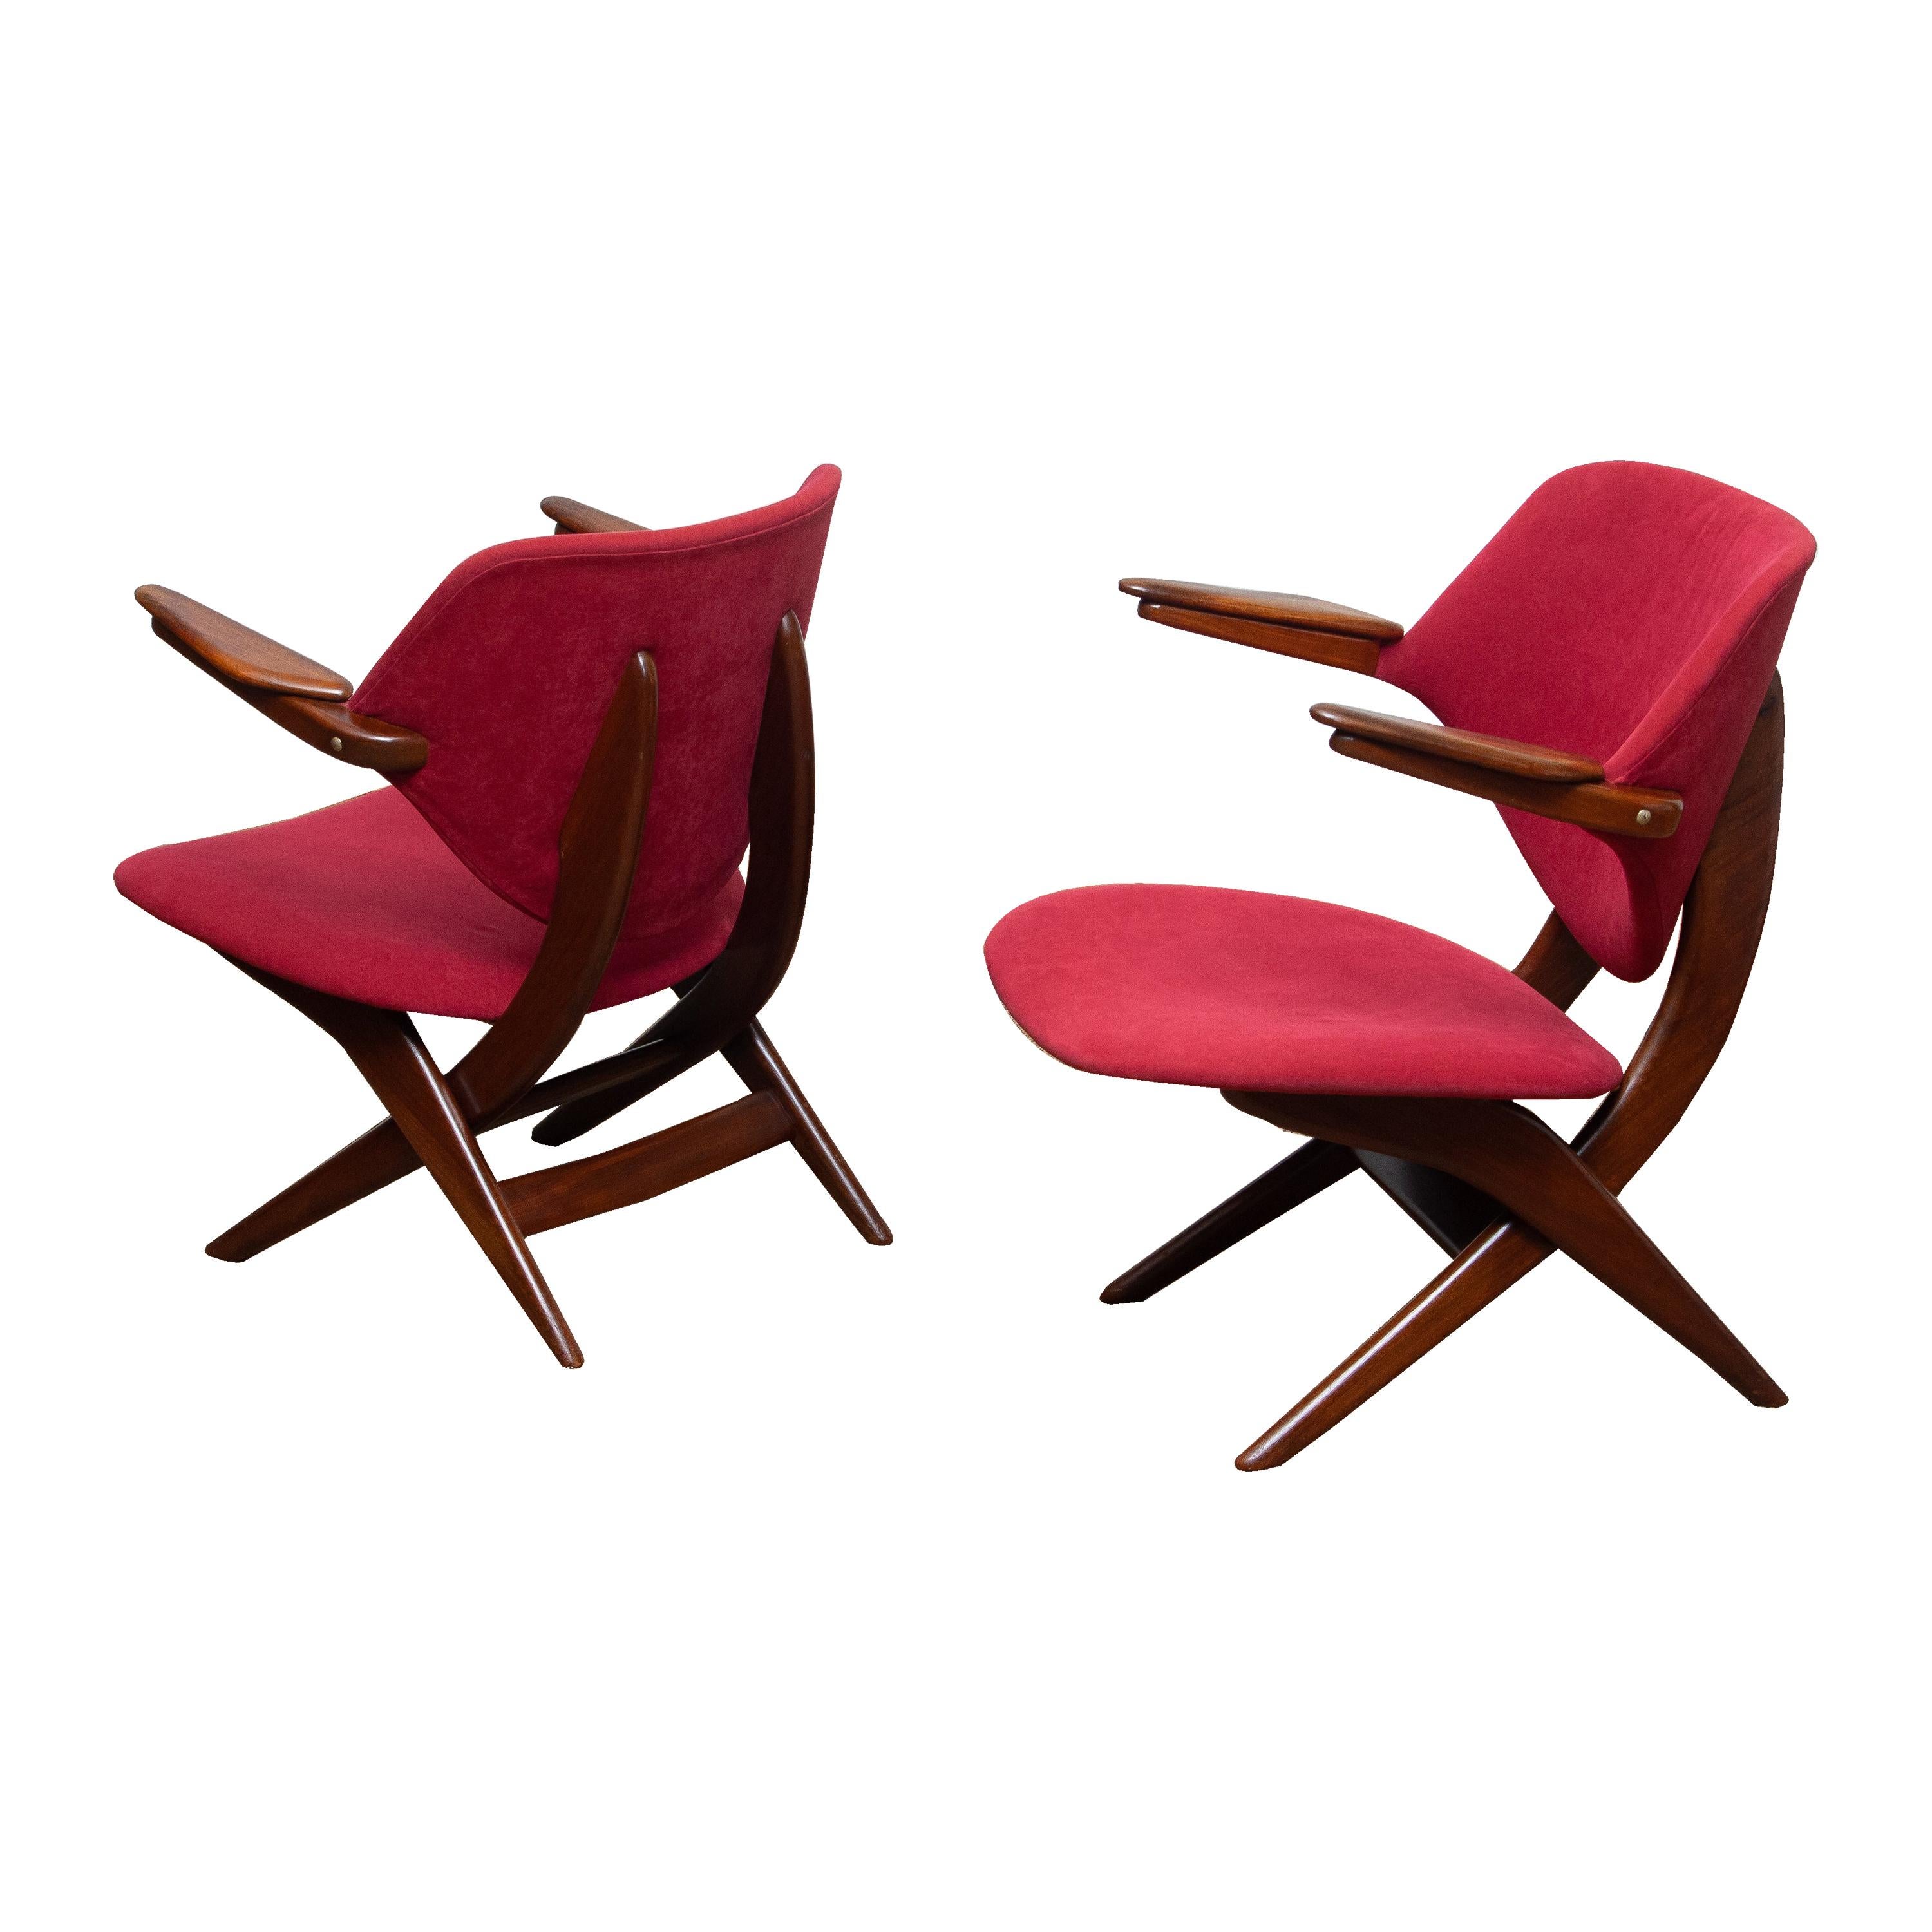 1950s, Set of Two Teak Lounge/Easy Chairs by Louis Van Teeffelen for Wébé 3